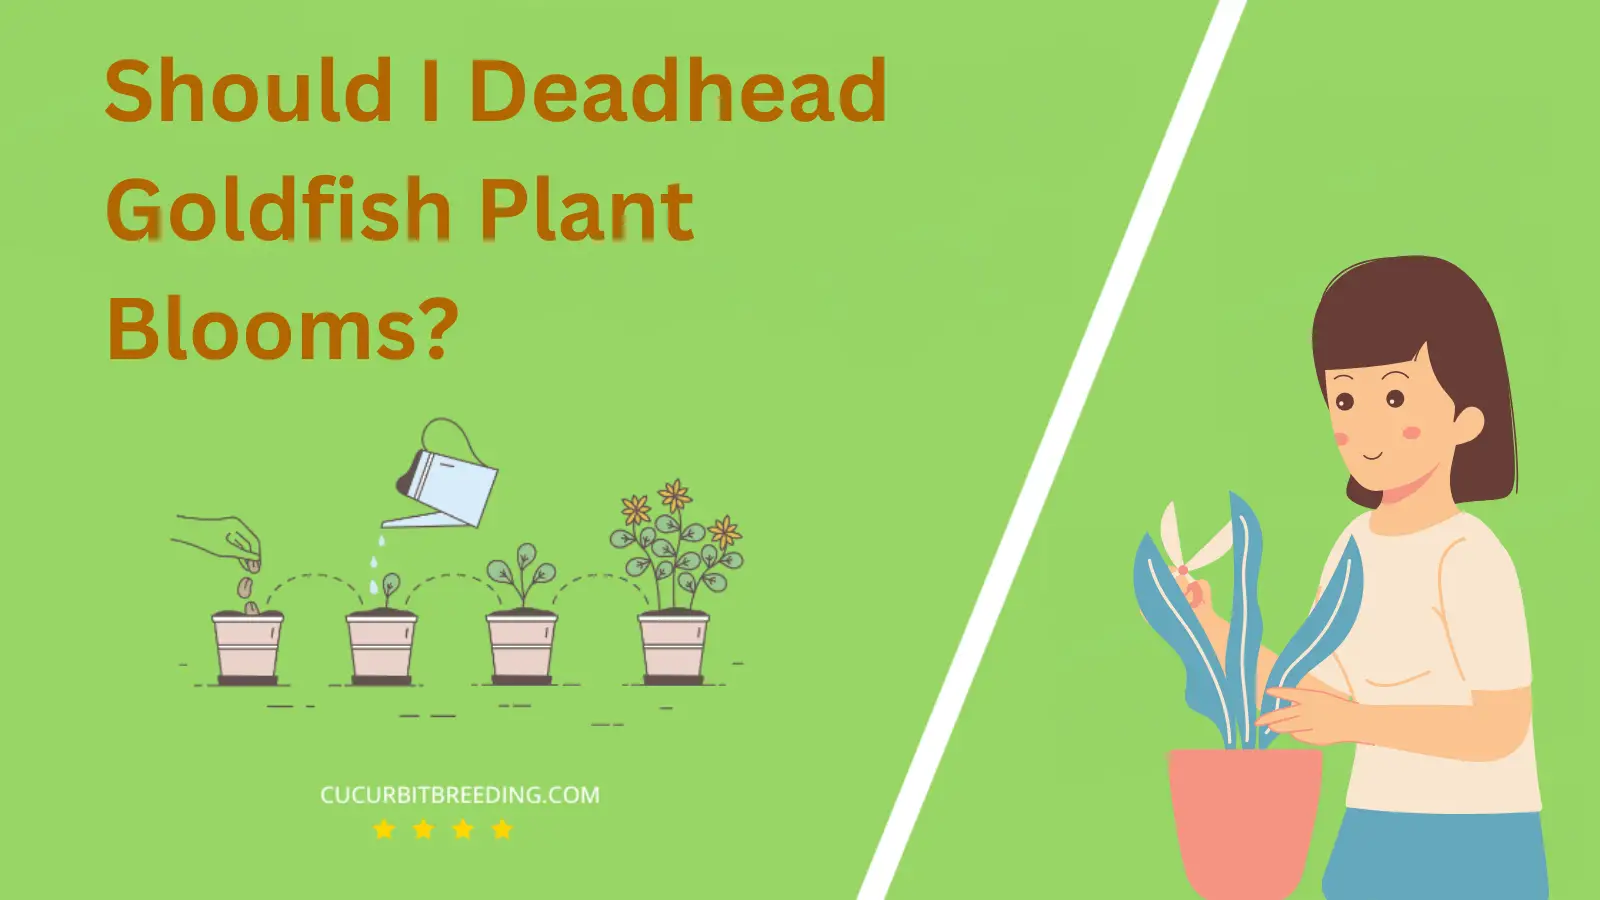 Should I Deadhead Goldfish Plant Blooms?